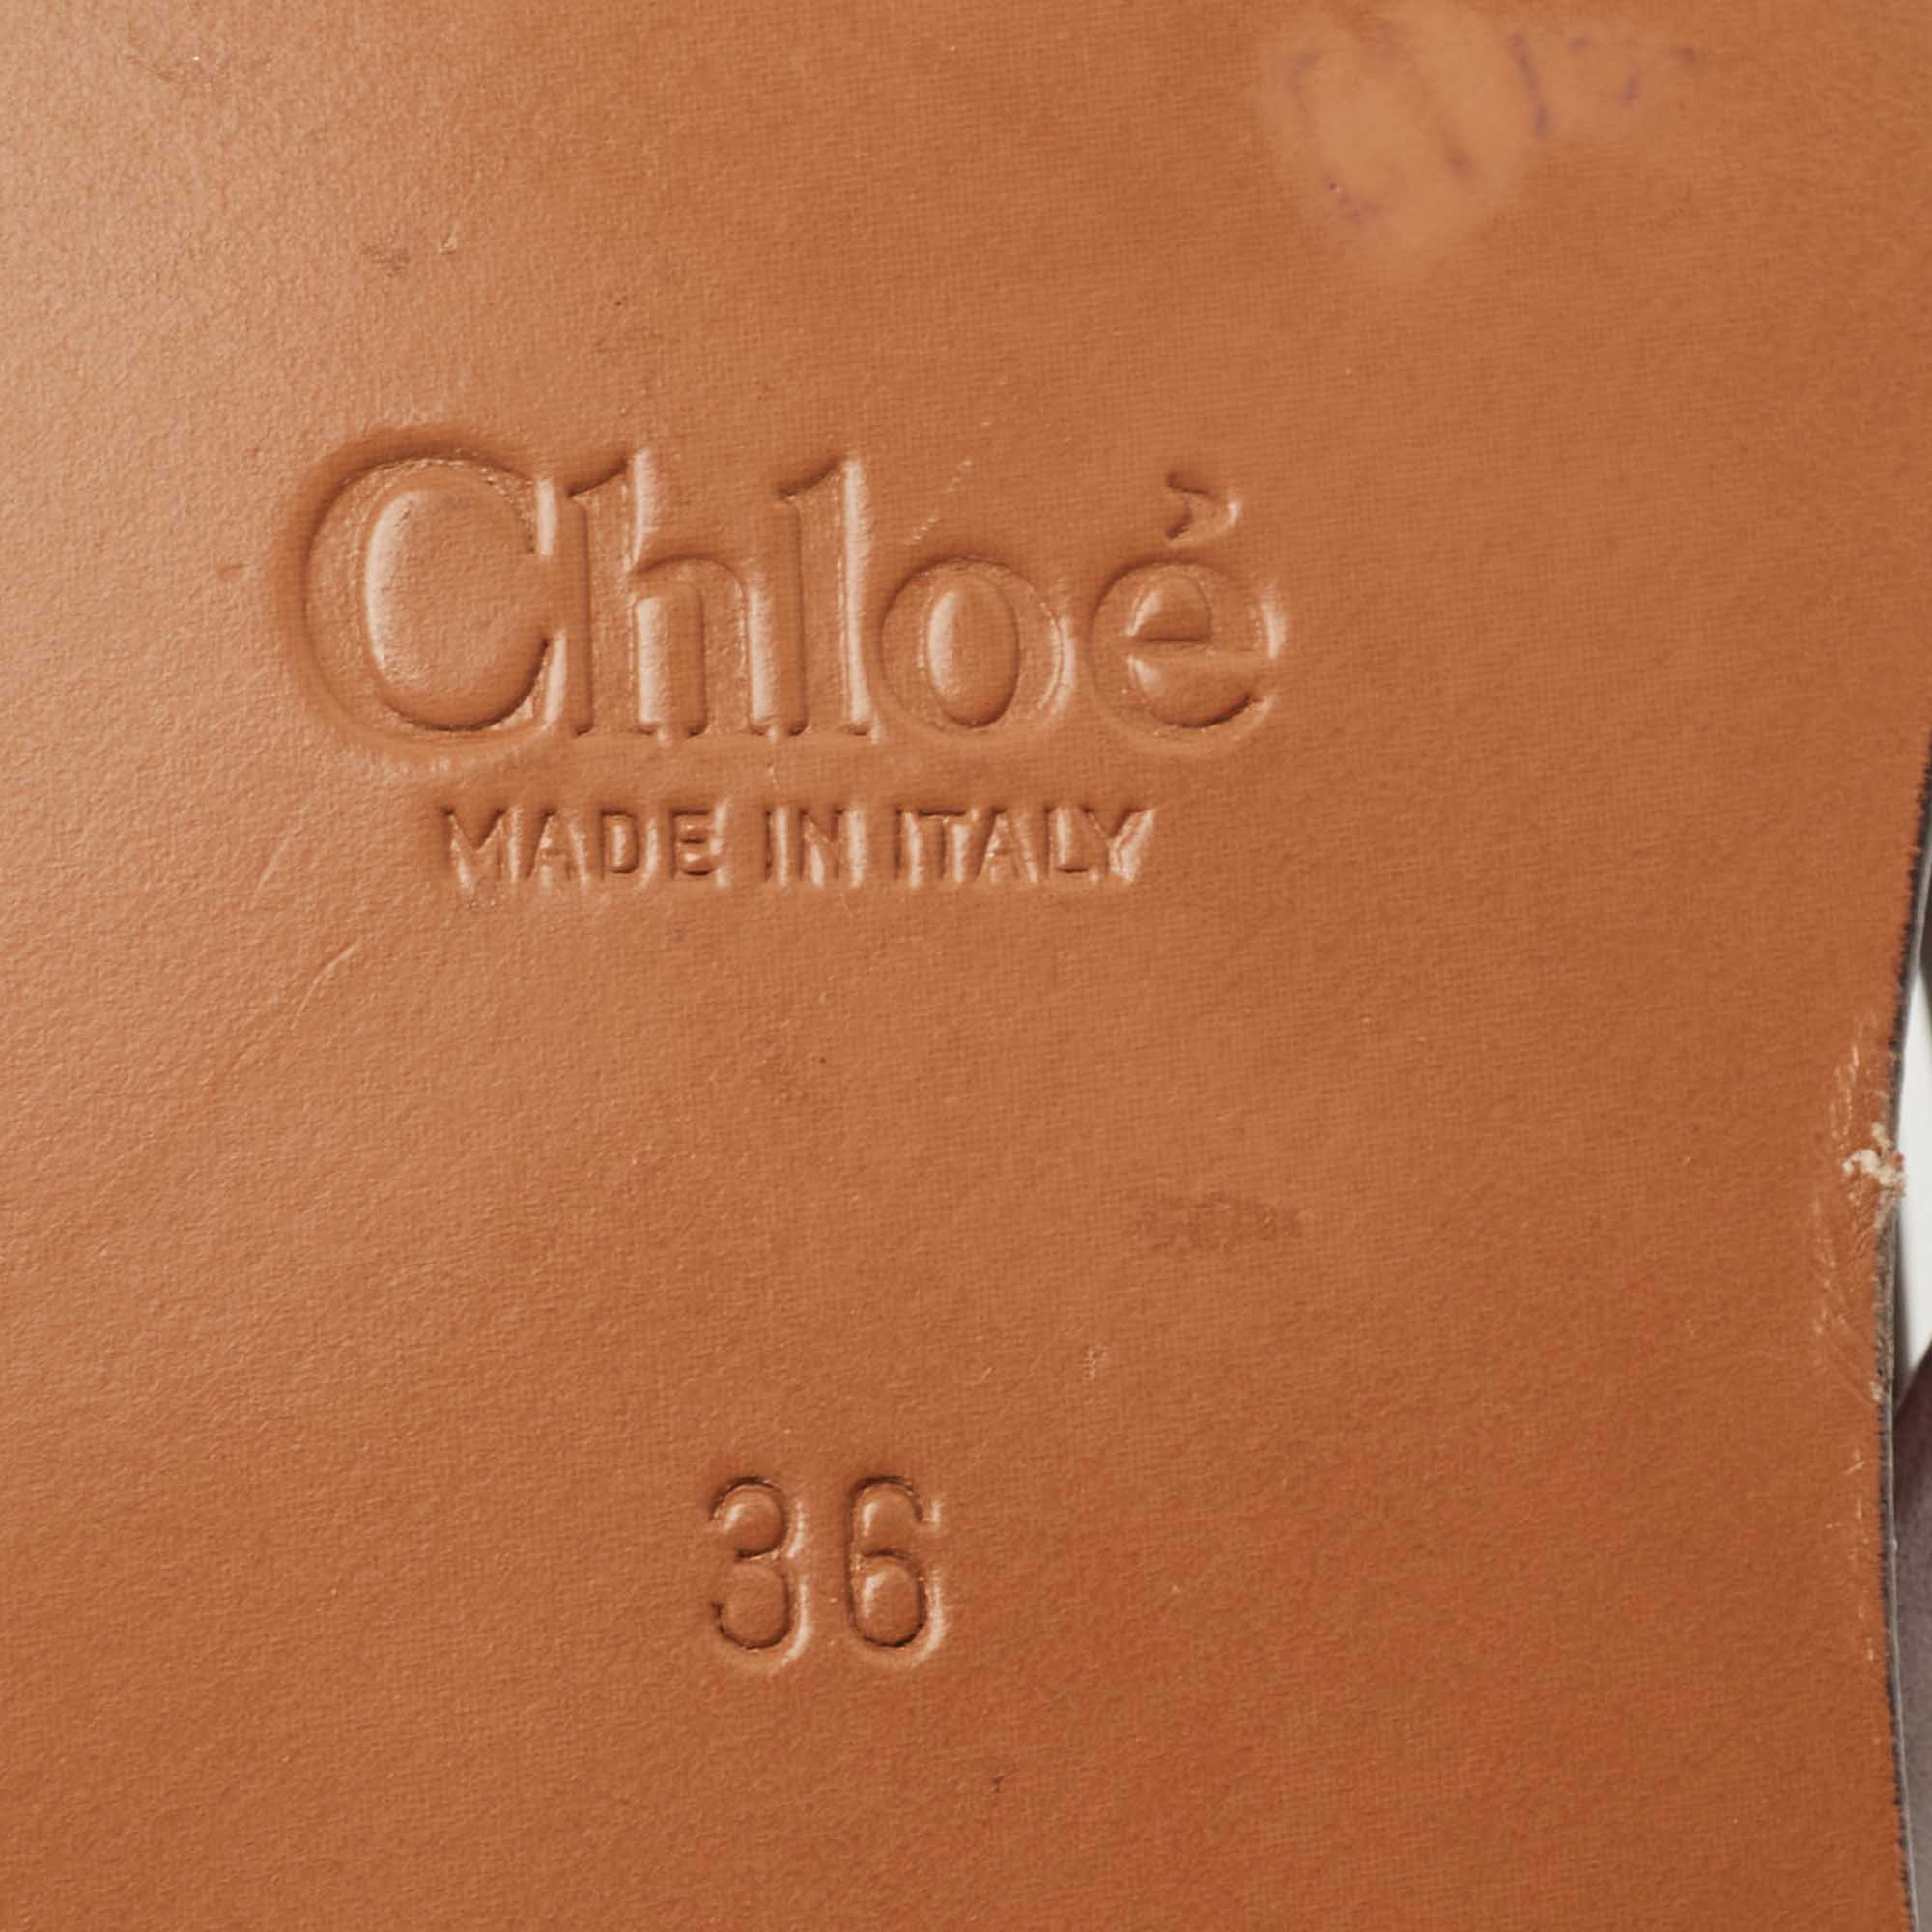 Chloe Burgundy Leather Rony Criss Cross Flat Slides Size 36